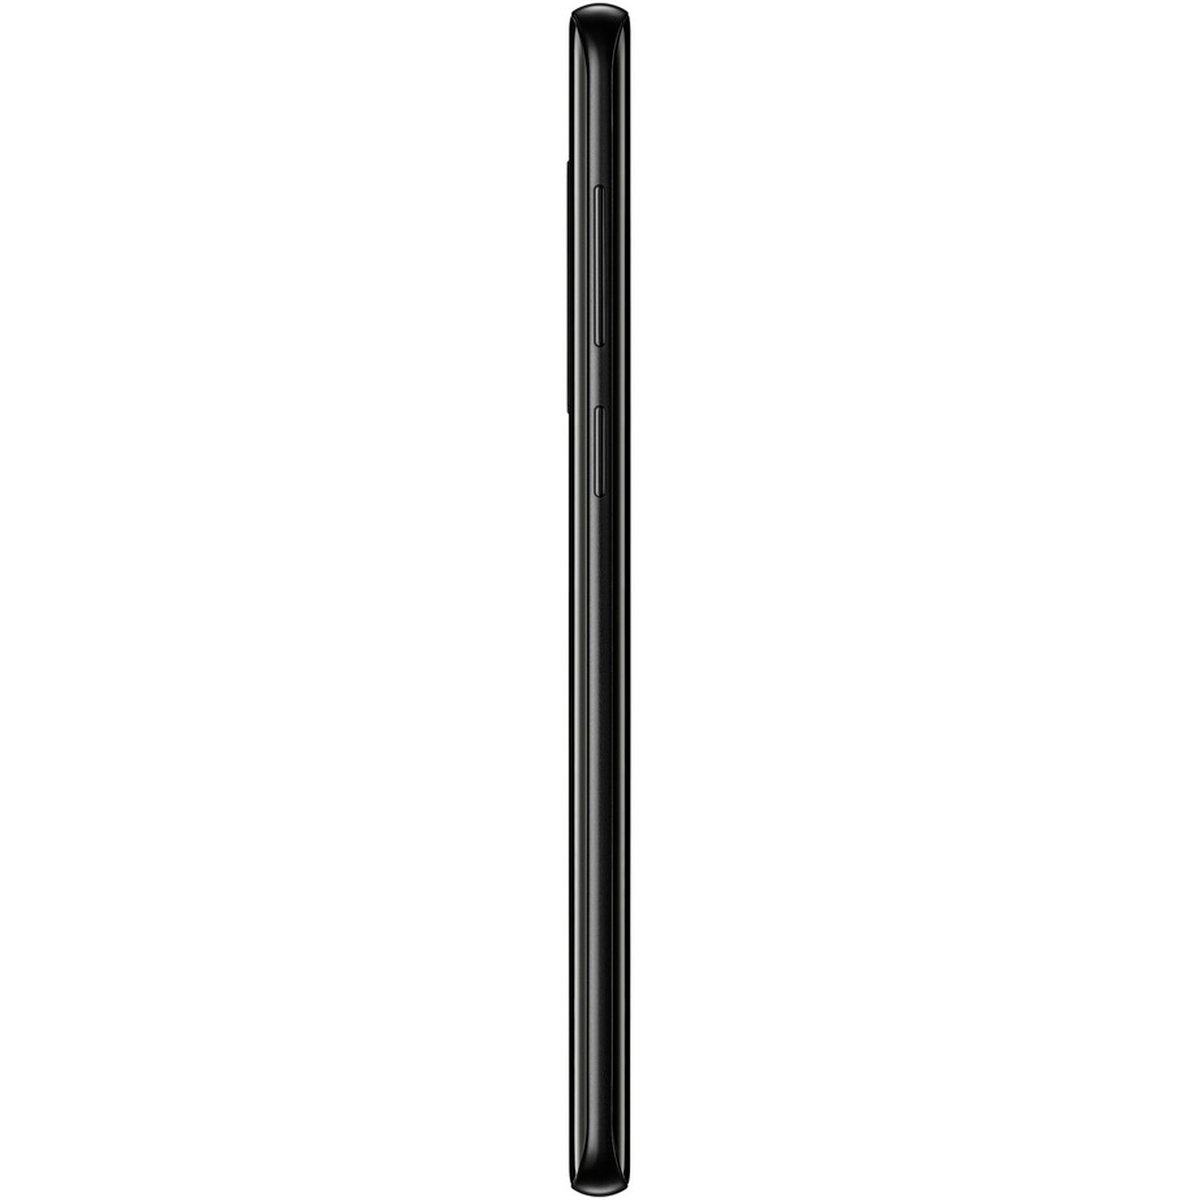 Samsung Galaxy S9+ SM-G965FZKHXSG 256 GB Midnight Black